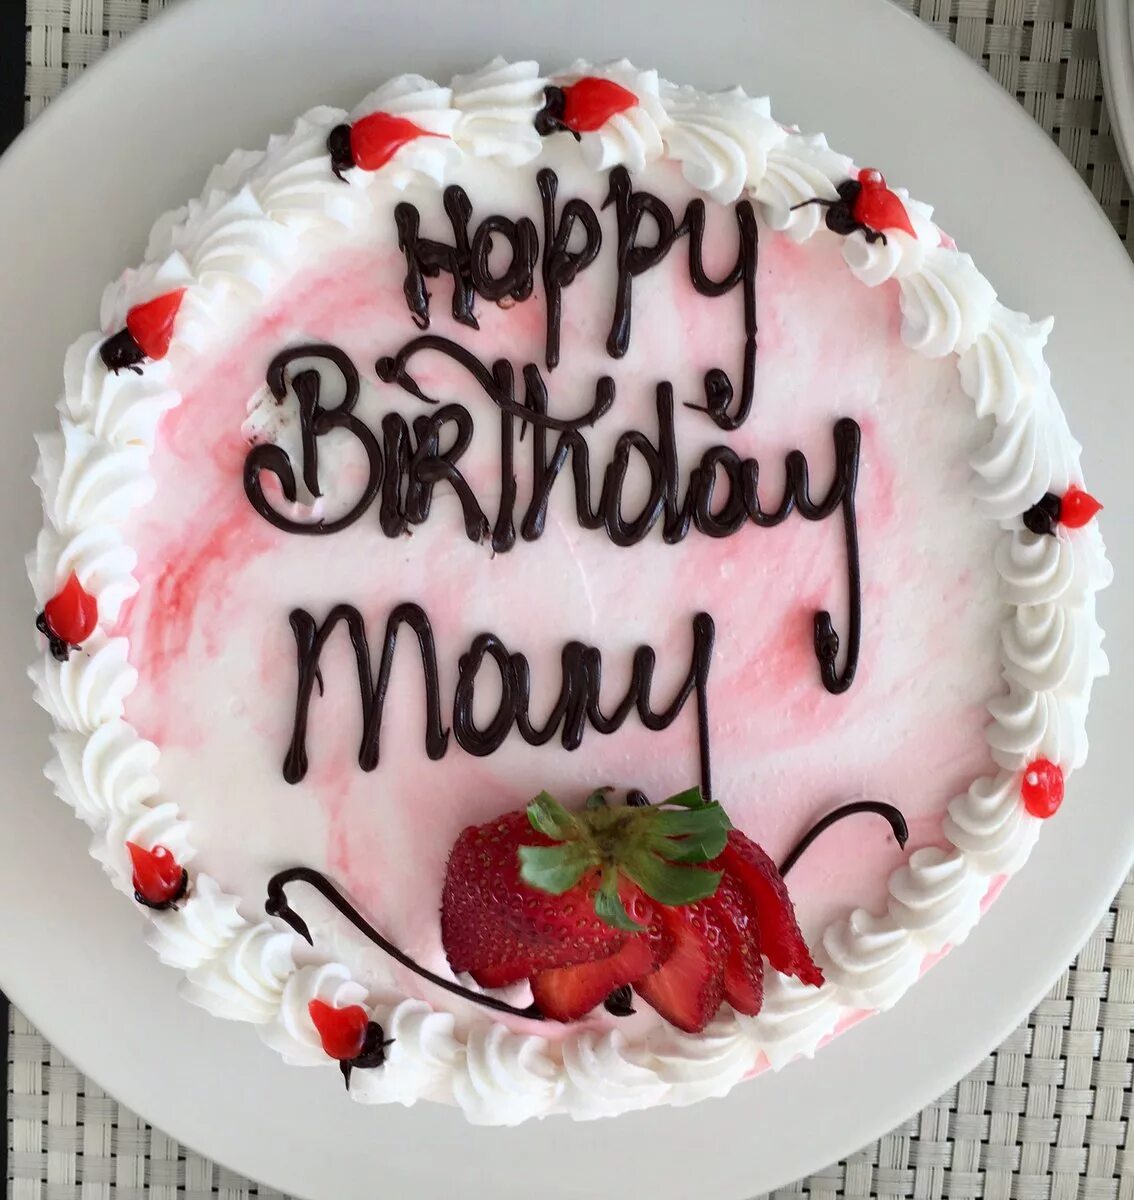 My good cake. Торт Happy Birthday. Торт с надписью Happy Birthday. Торт на день рождения Хэппи бездей. Надпись Хэппи бездей на торт.